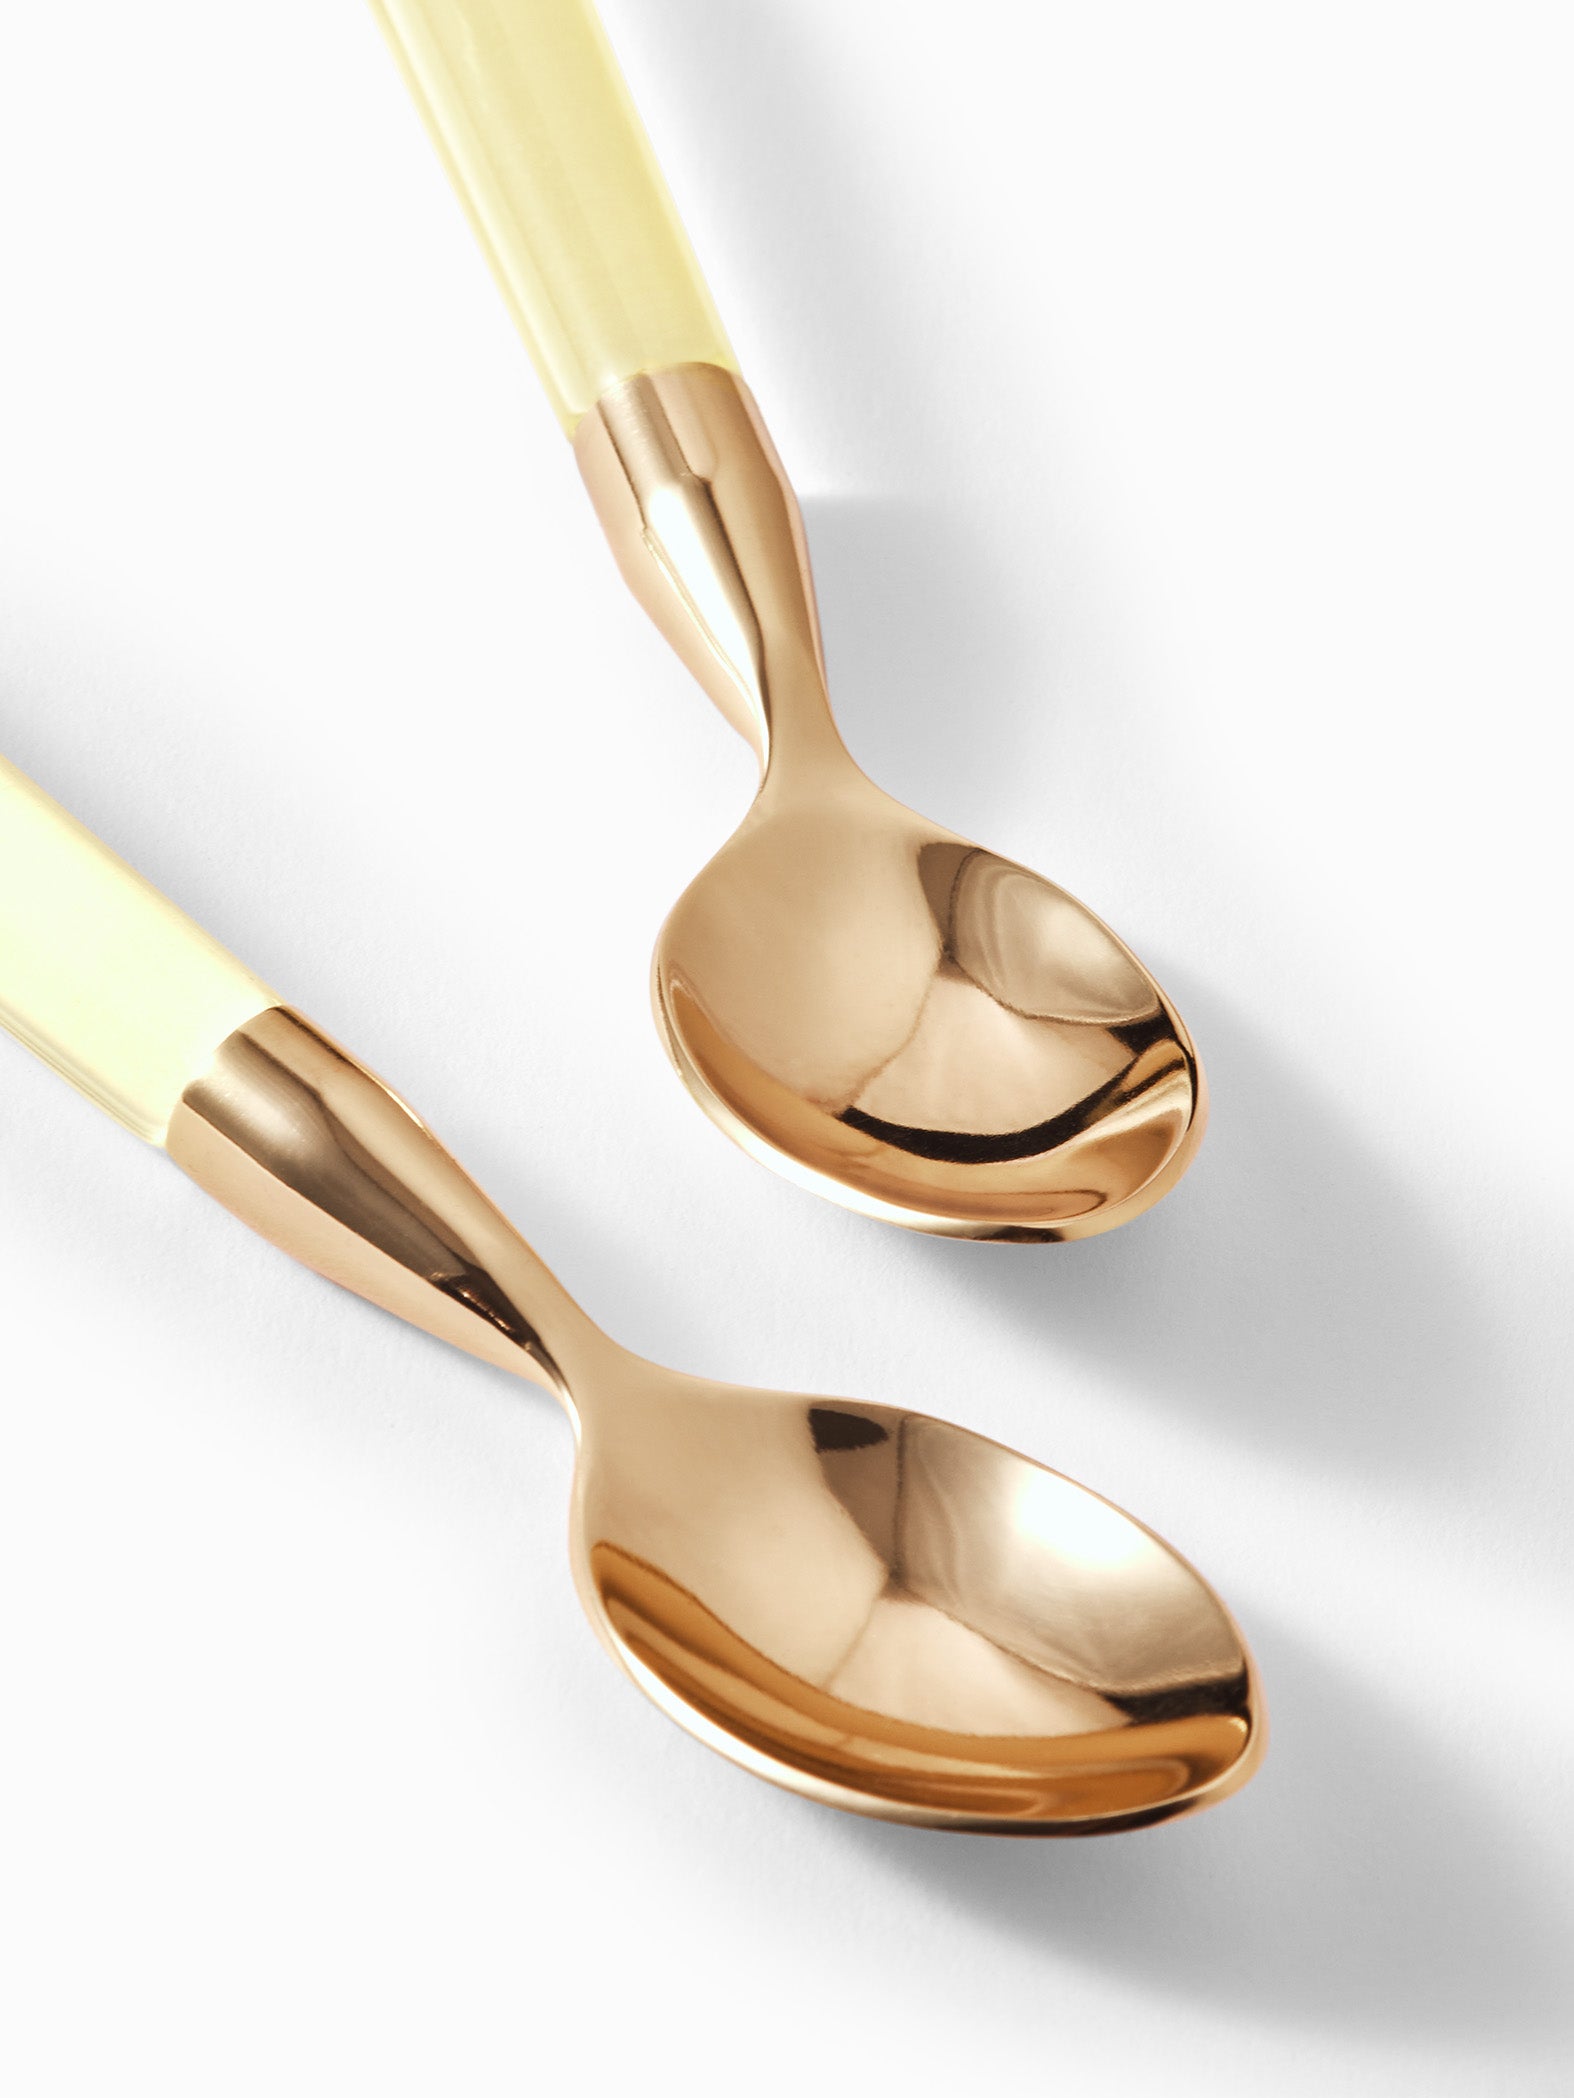 Gold & Acrylic Dinner Spoons